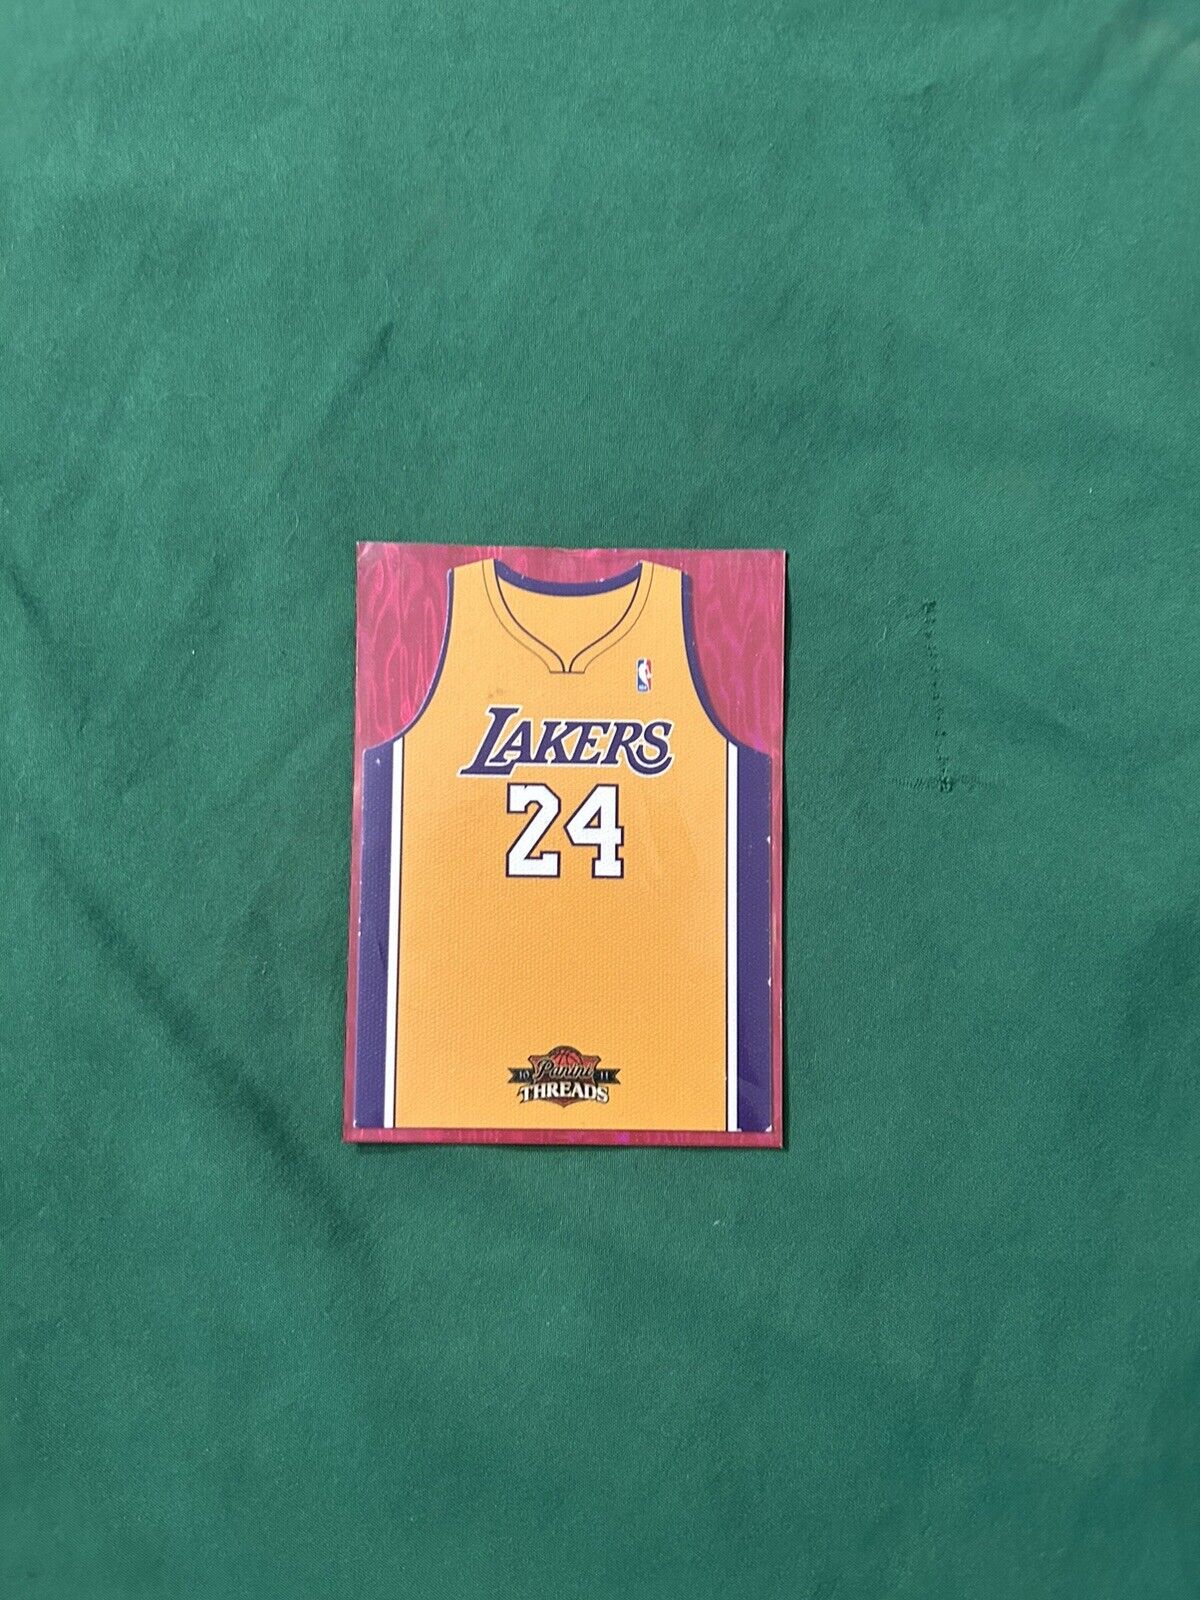 Kobe Bryant Jersey Card